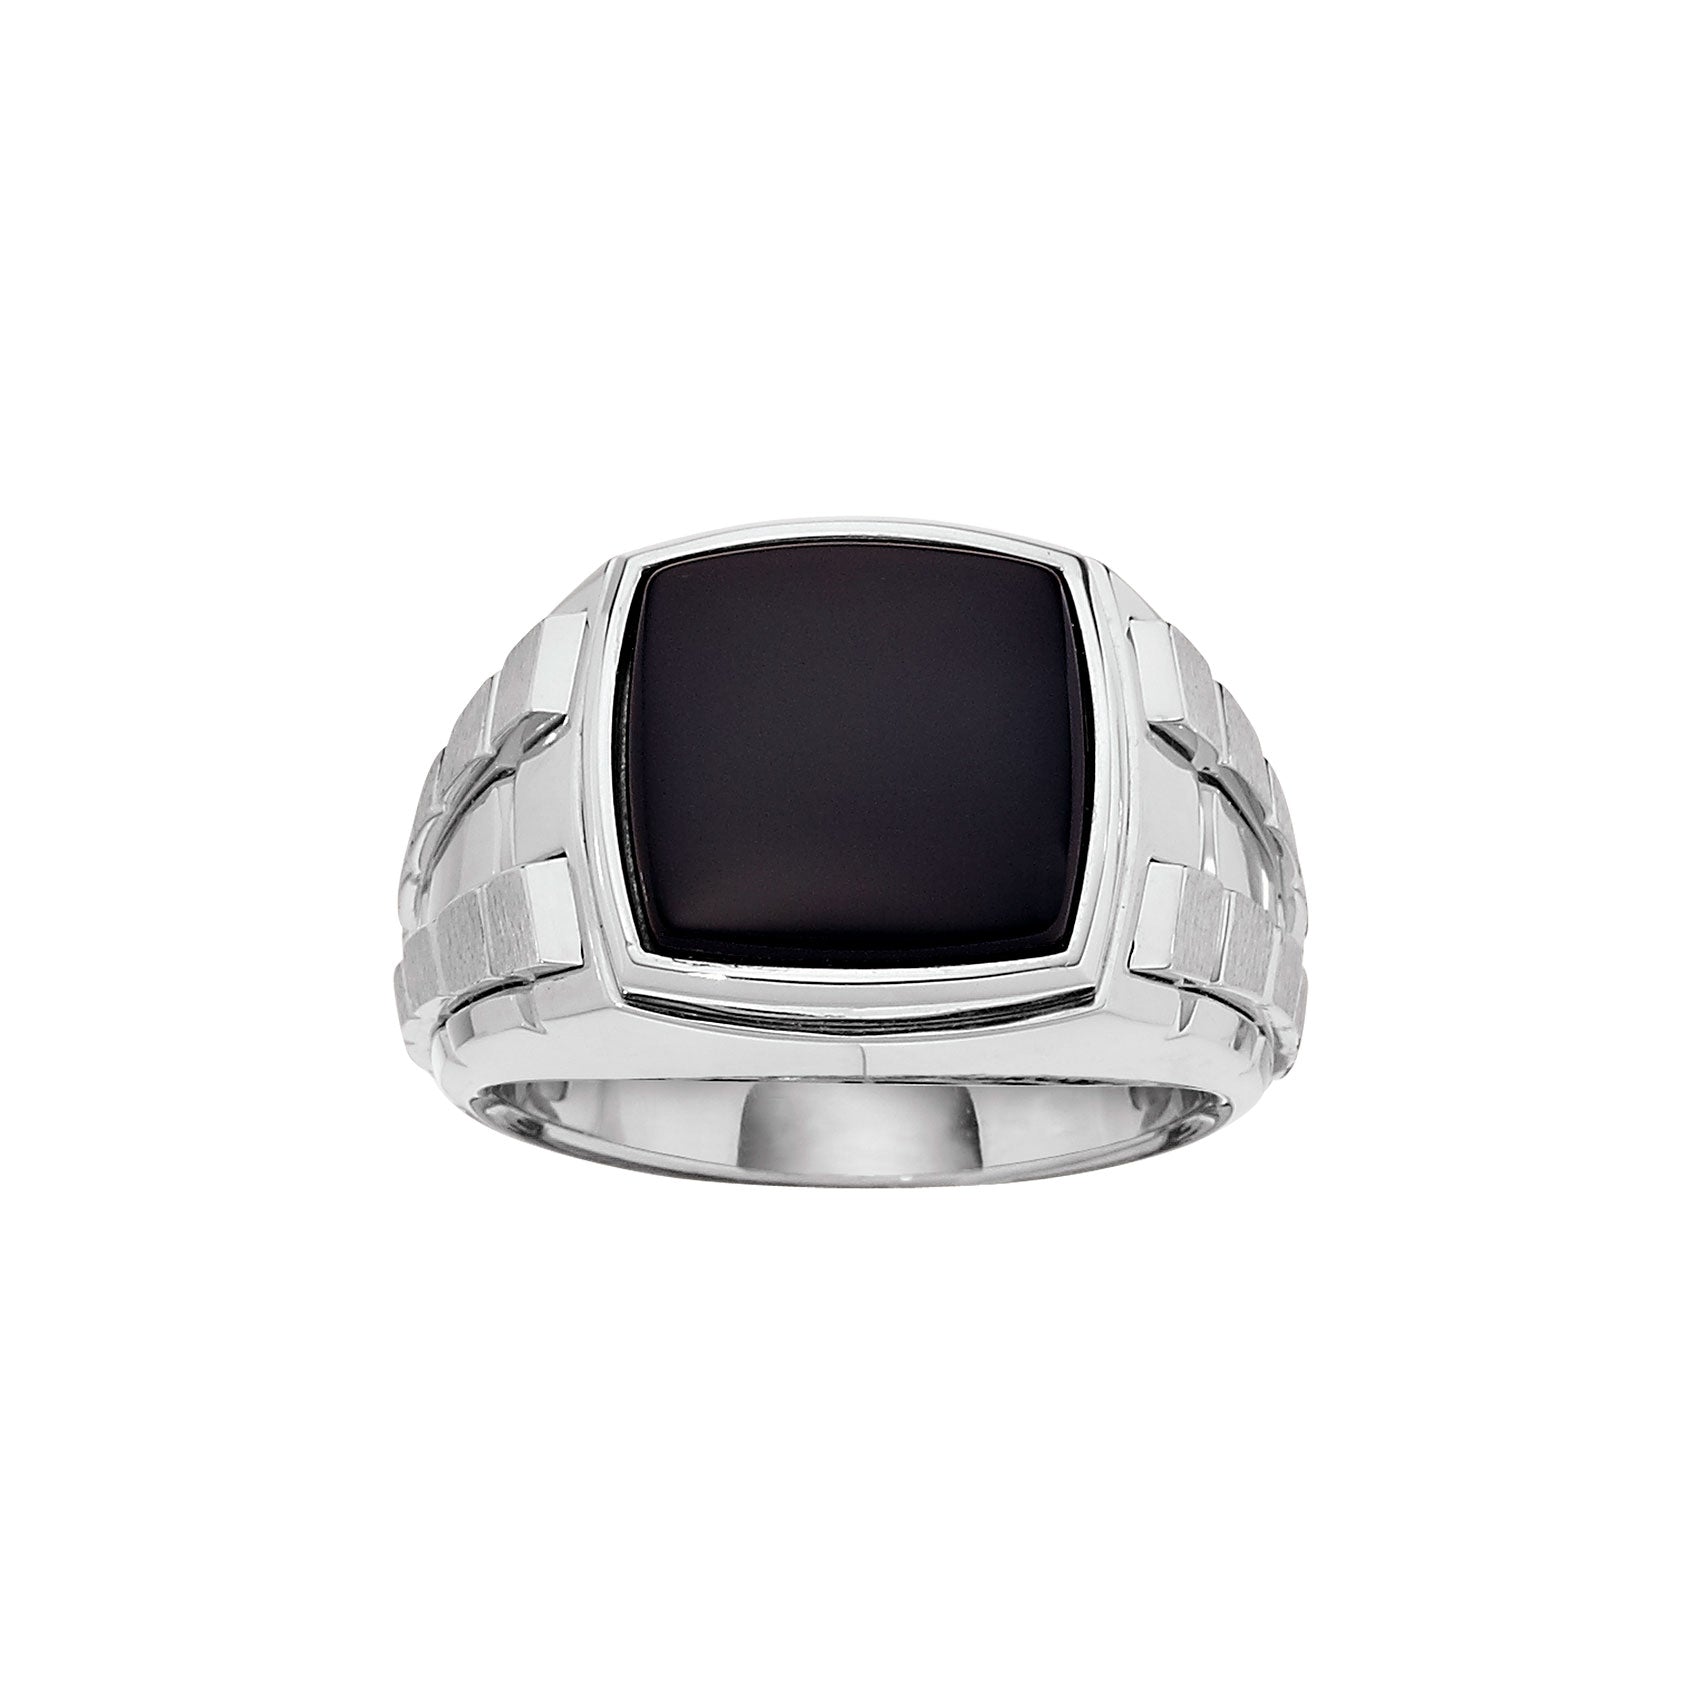 Onyx Stone Mens Ring, Black Oval Stone Turkish Handmade Silver Ring, Unique  Elegant Silver Ring, 925 Sterling Silver Ring, Gift Ring - Etsy | Silver  ring designs, Sterling silver mens rings, Silver rings handmade